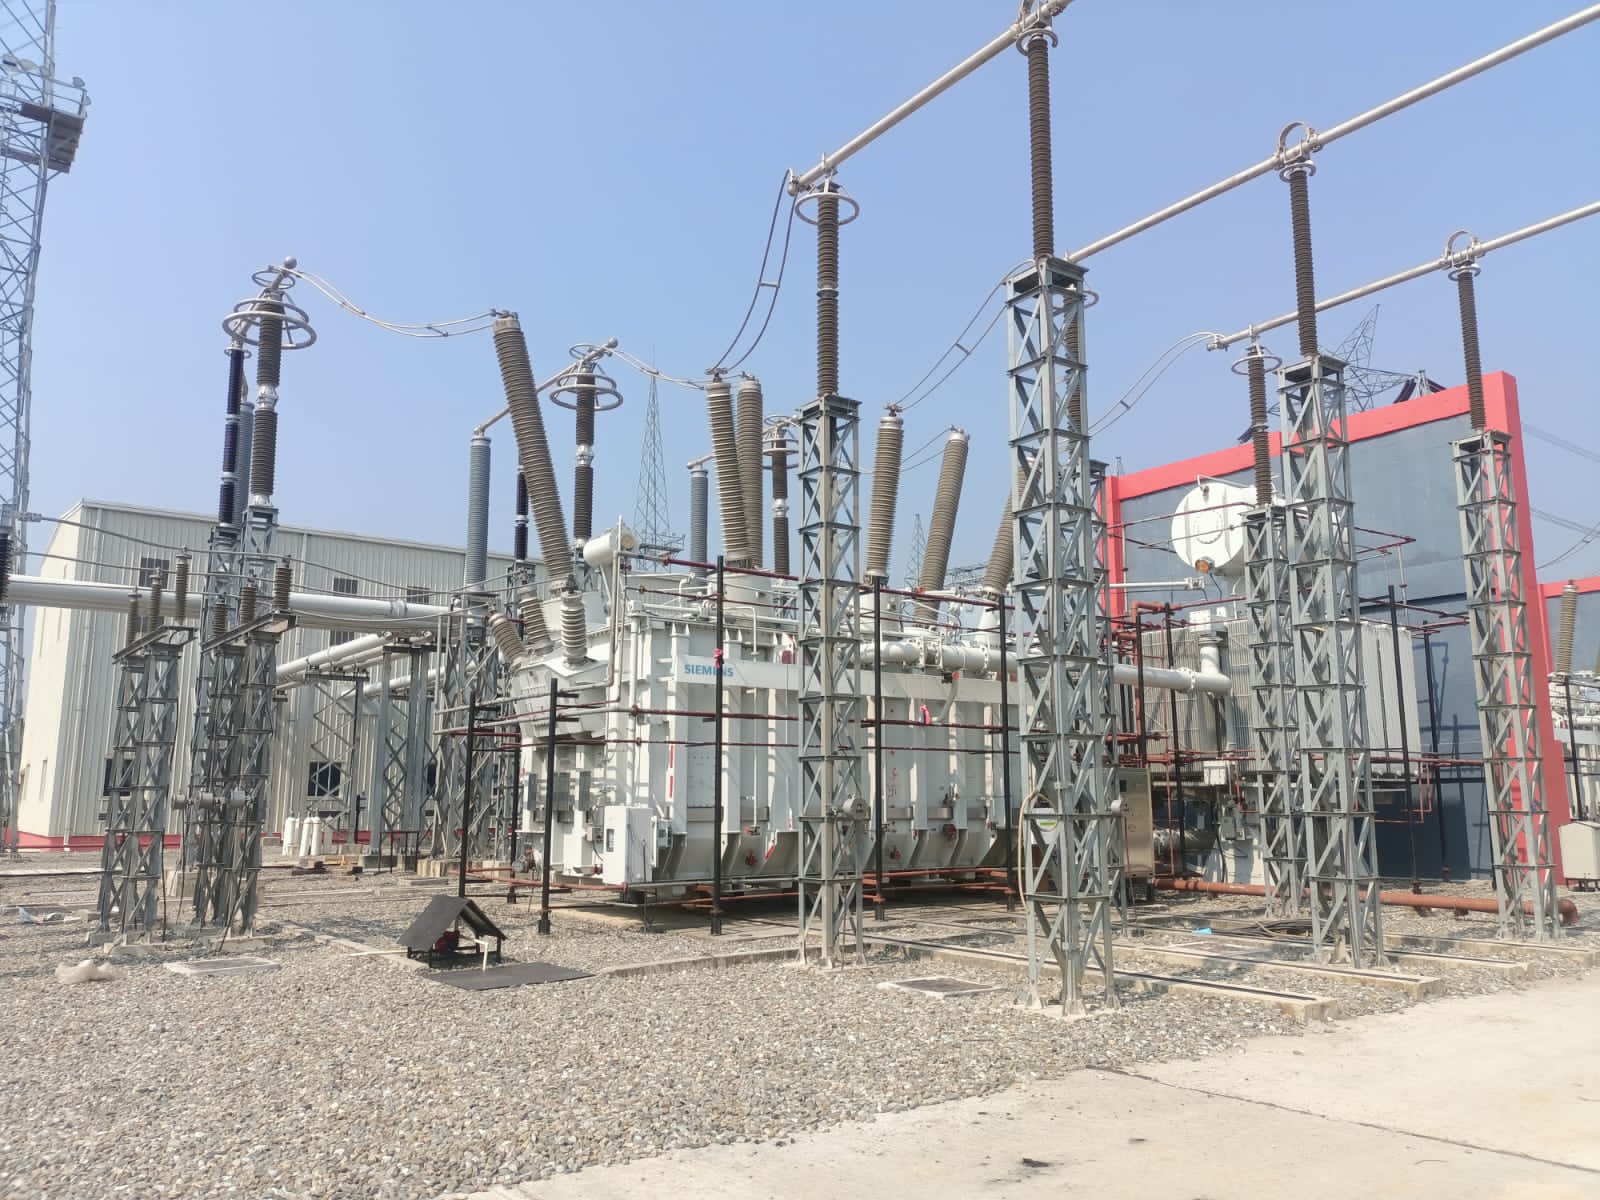 NEA completes 400 kV Inaruwa substation to supply 4,000 megawatts of power